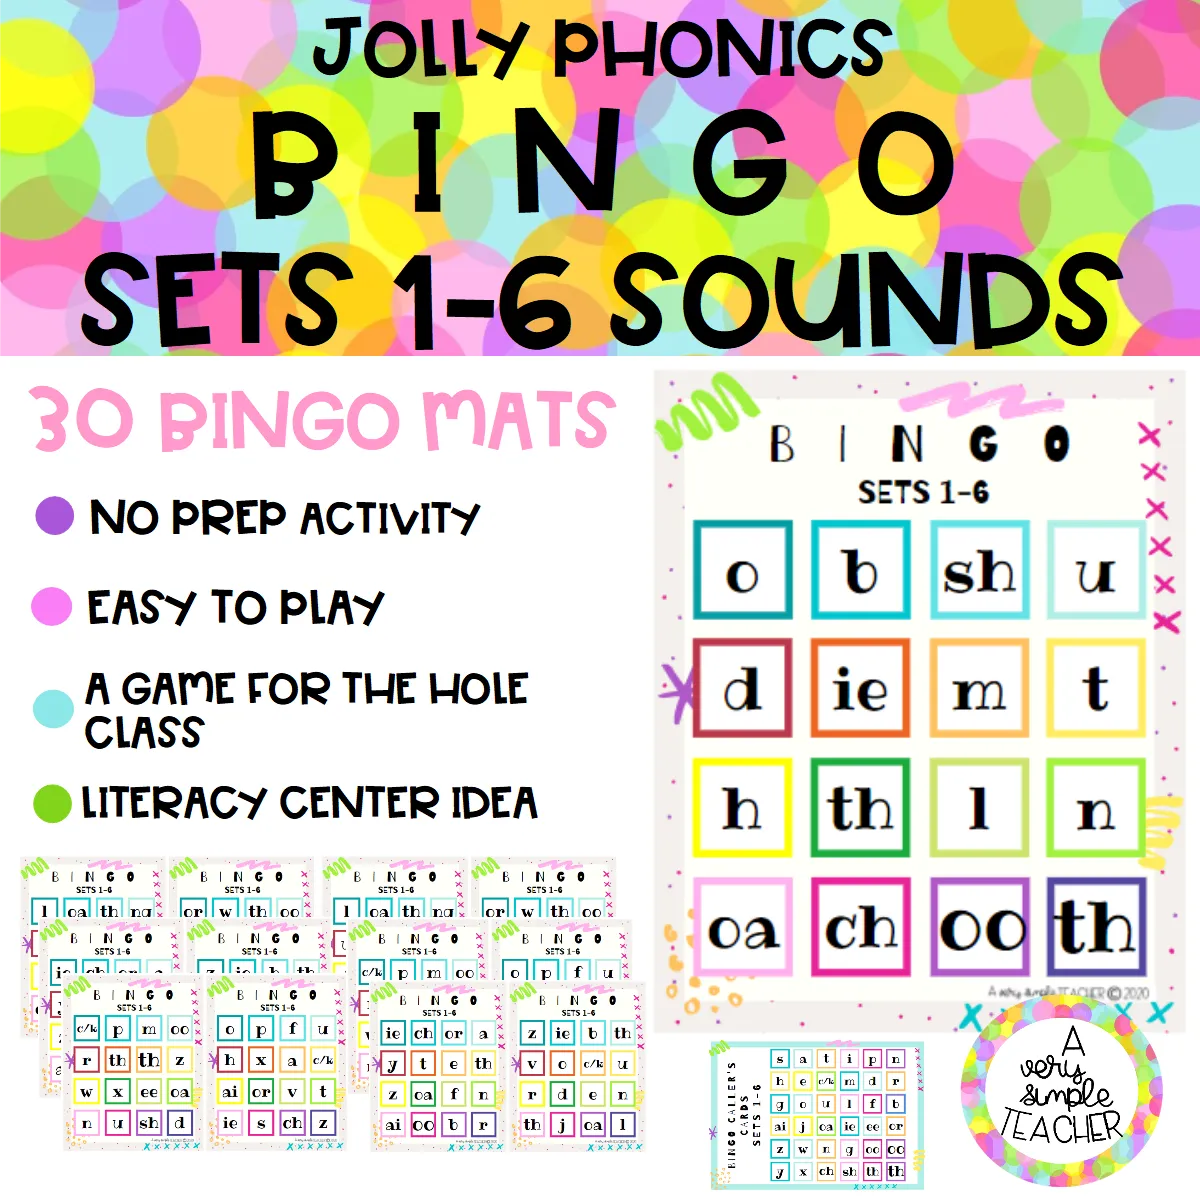 JOLLY PHONICS Bingo Sets 1-6 sounds